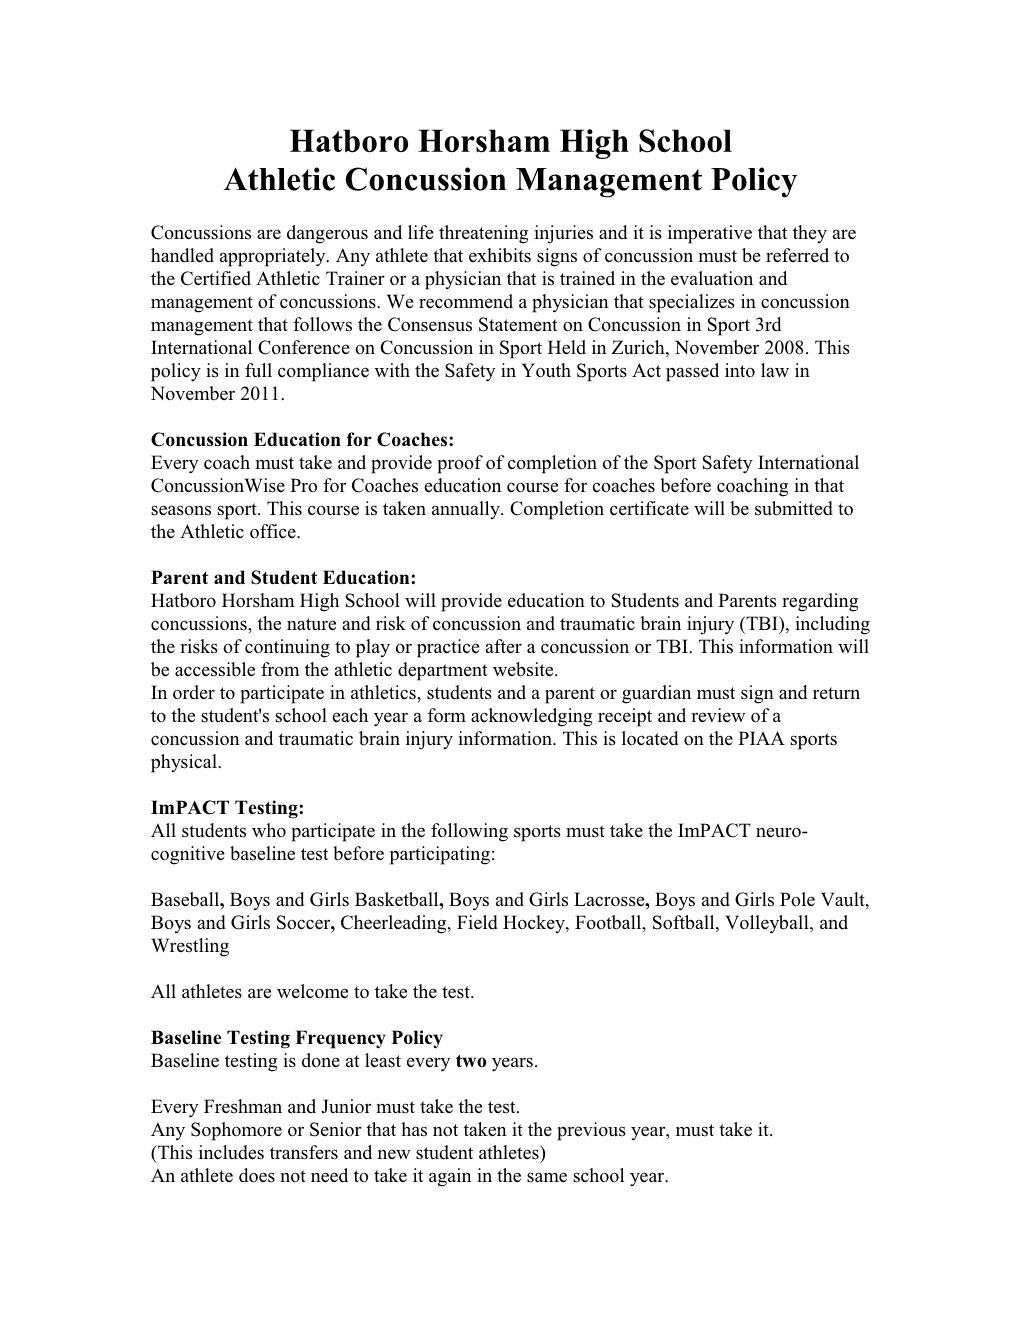 Hatboro Horsham High School Concussion Management Policy